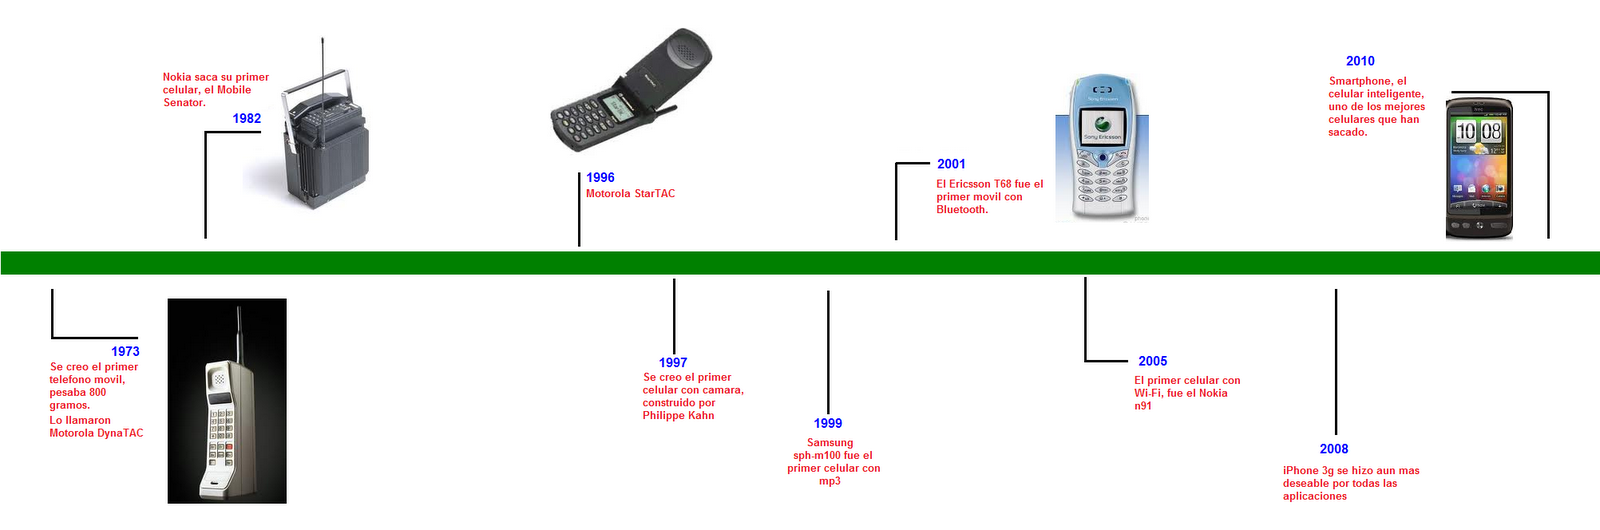 Evolucion Del Telefono Celular